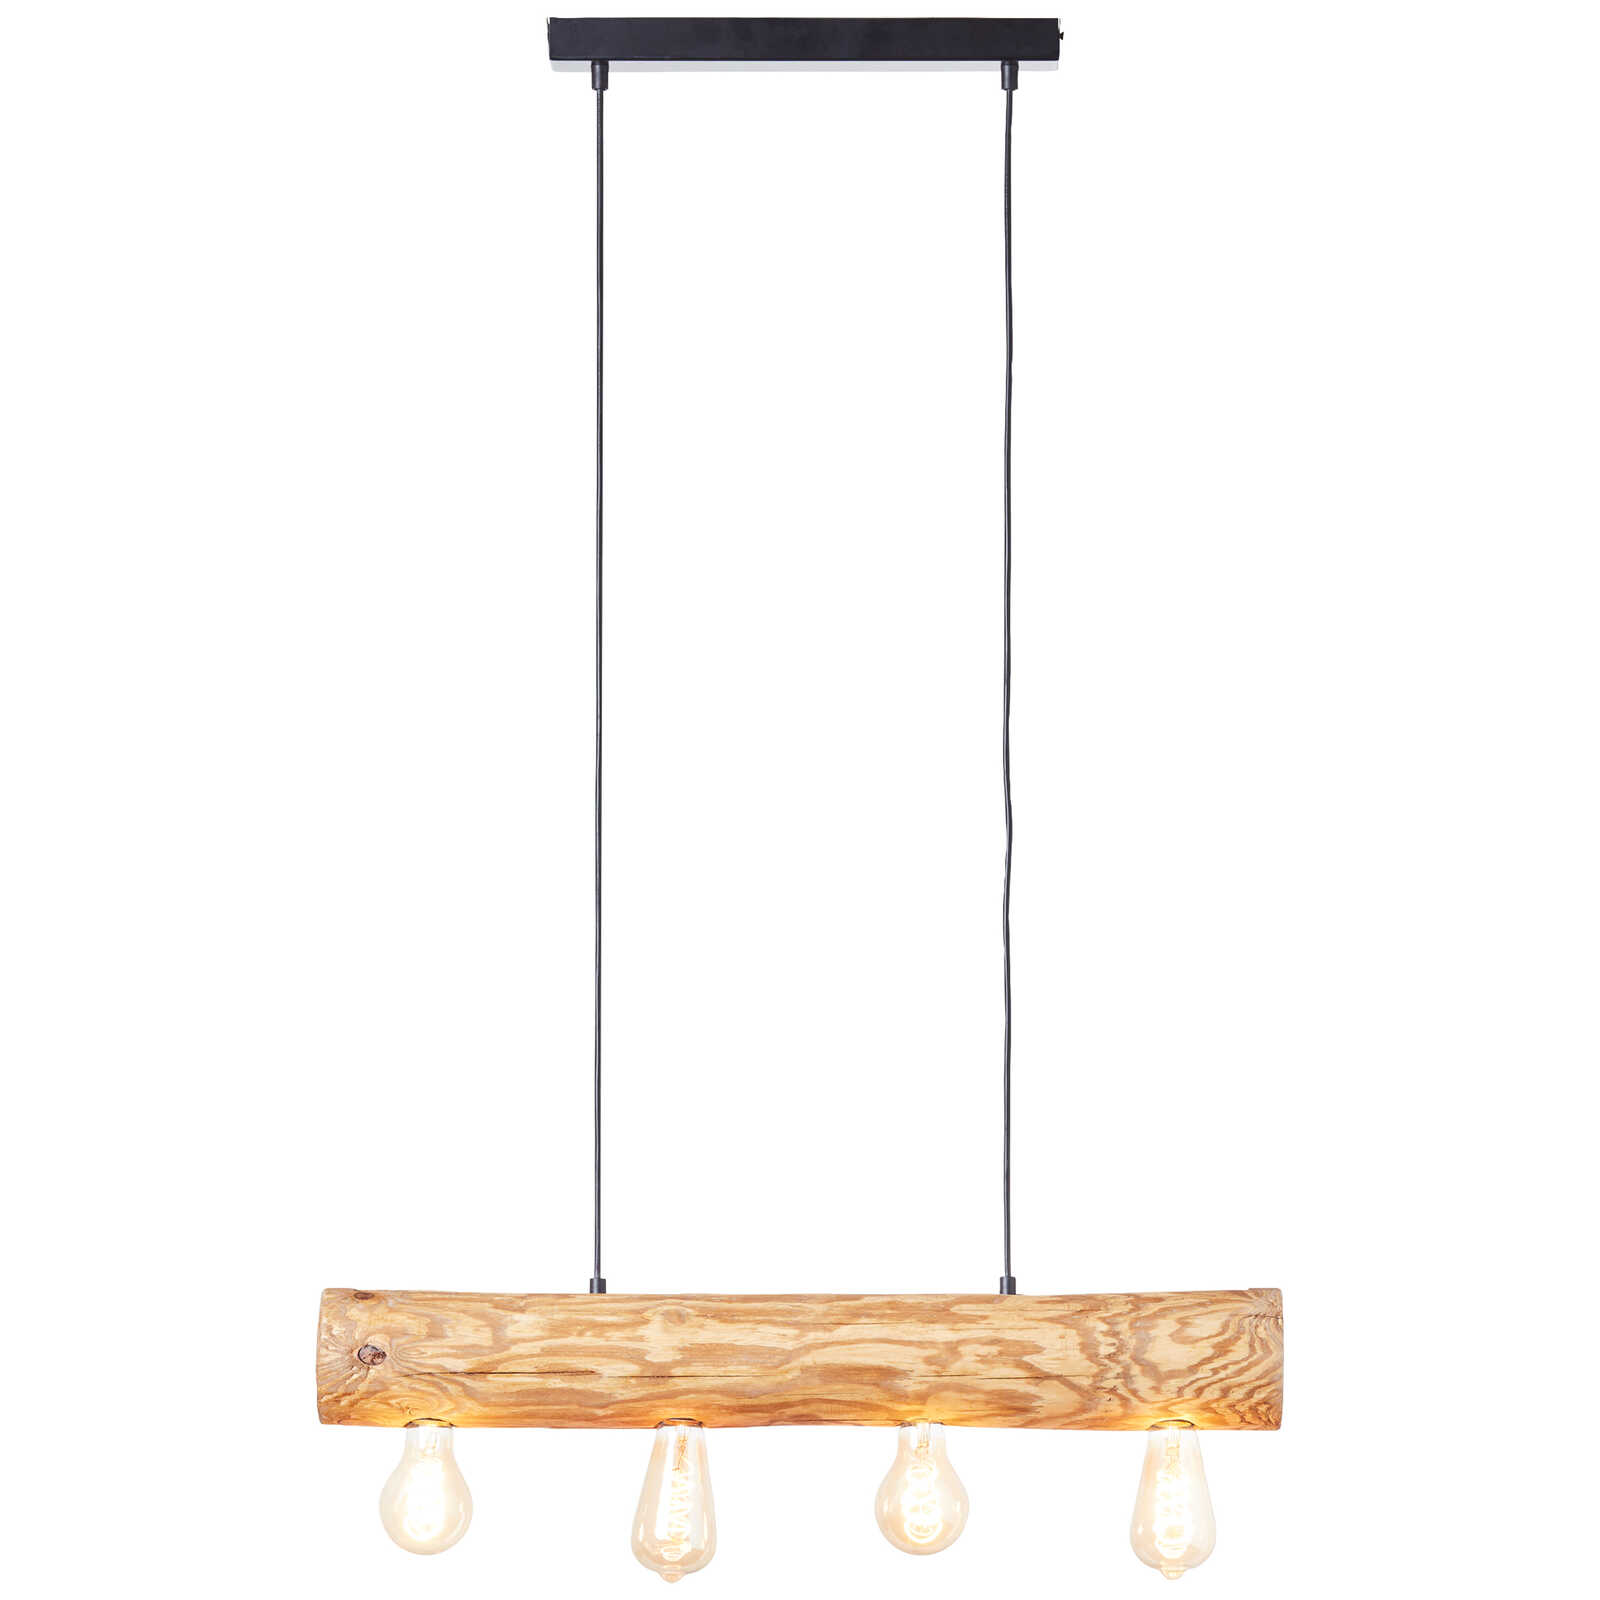             Houten hanglamp - Samuel 1 - Bruin
        